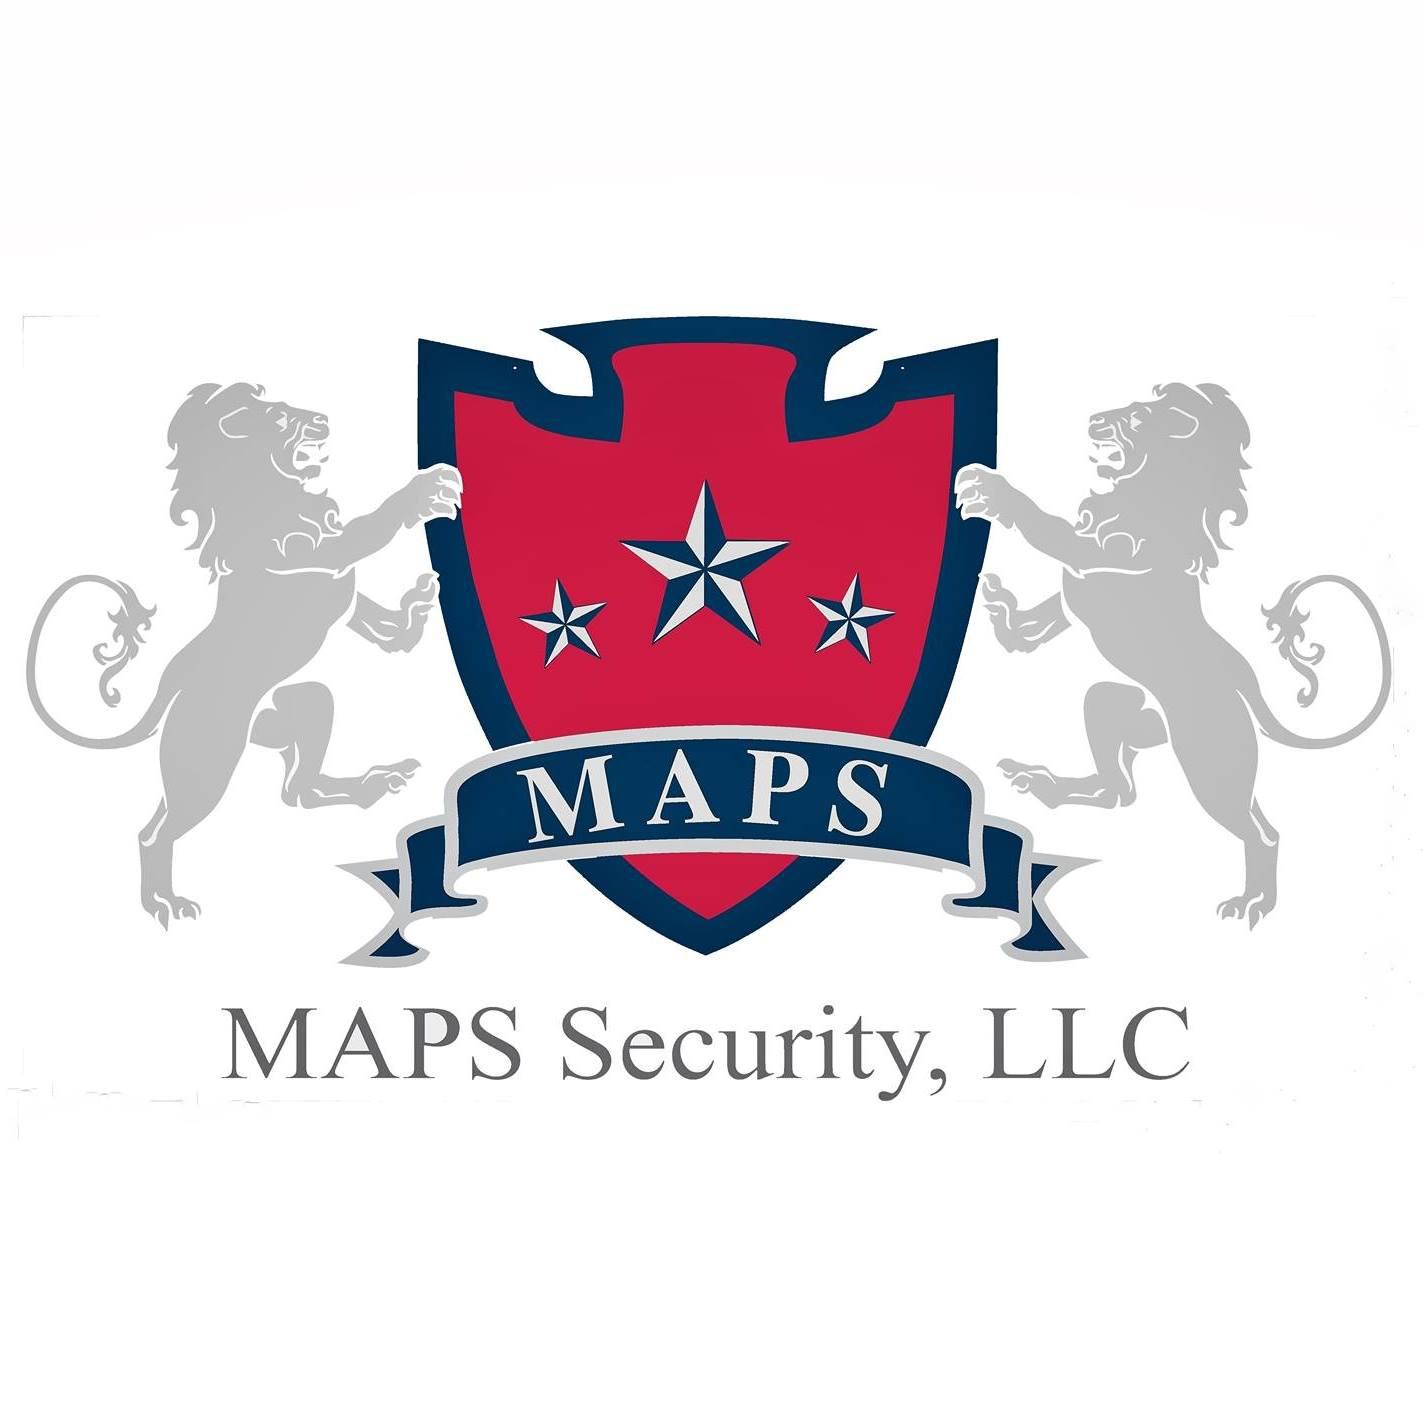 MAPS Security, LLC